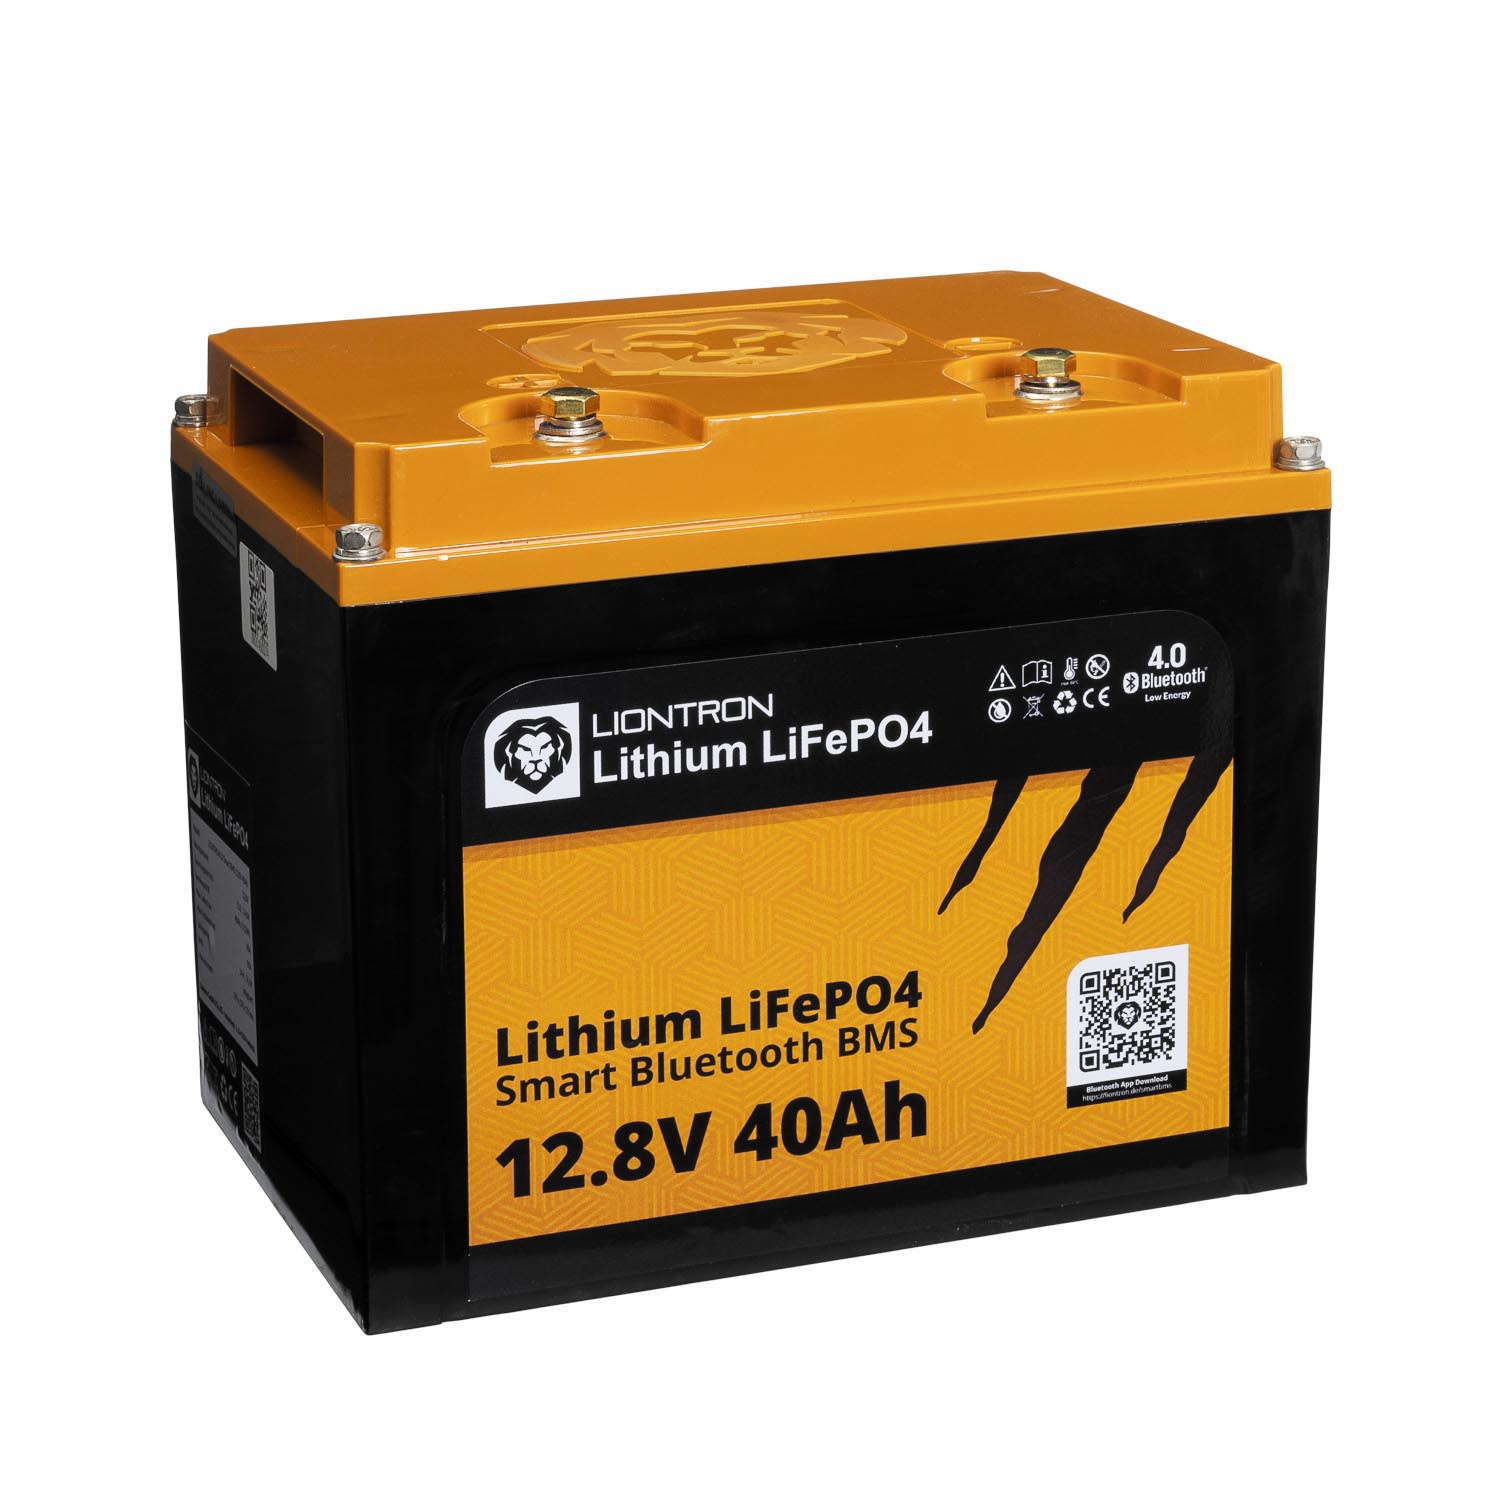 LiFePO4 Lithium Motorrad Batterien laden